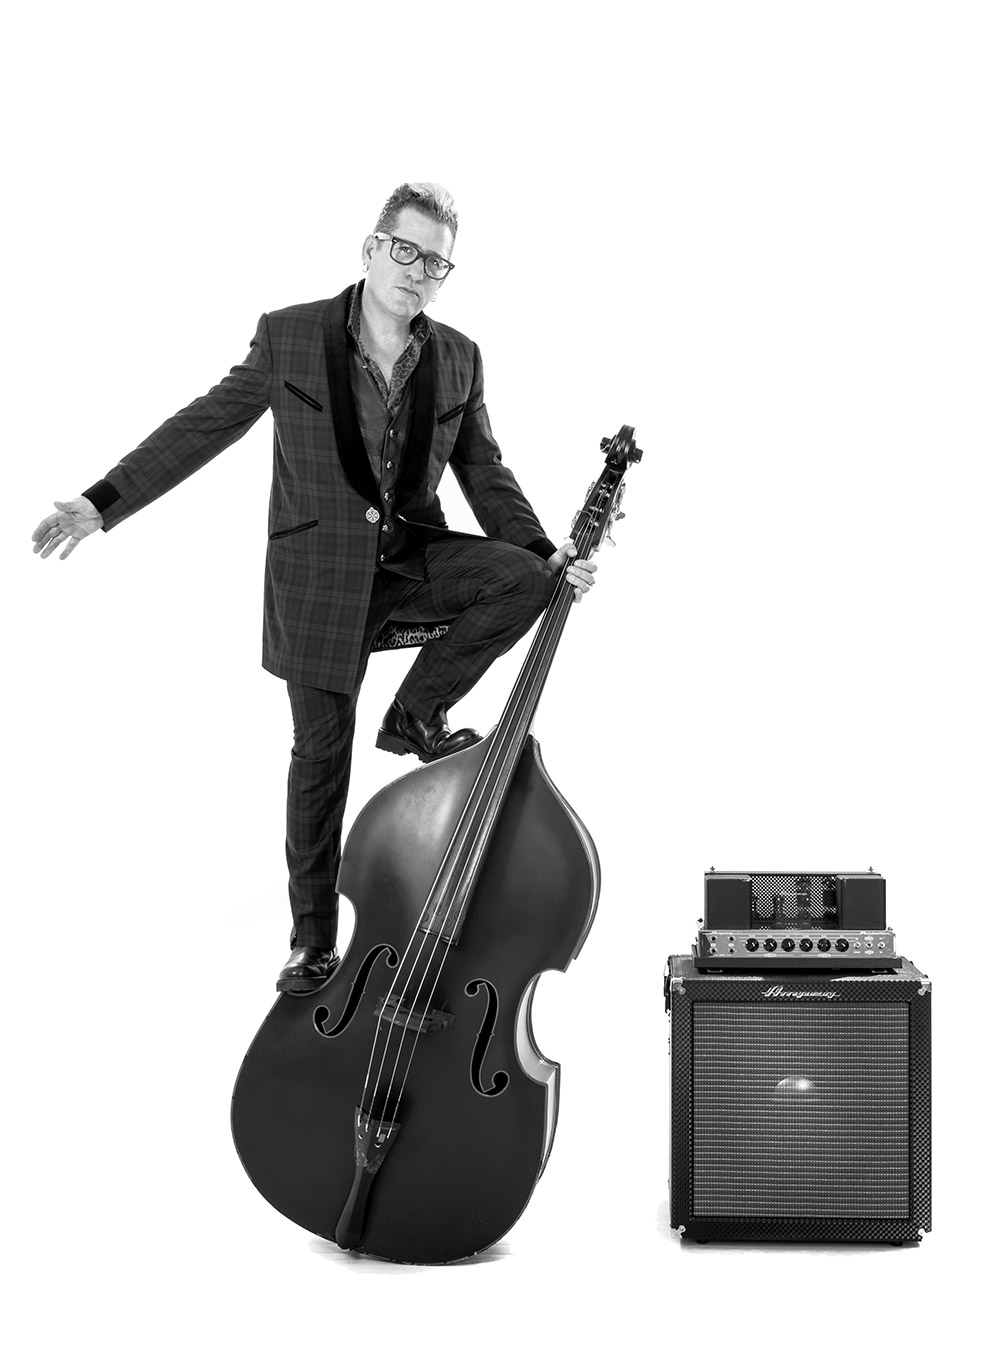 Lee Rocker standing on a double bass